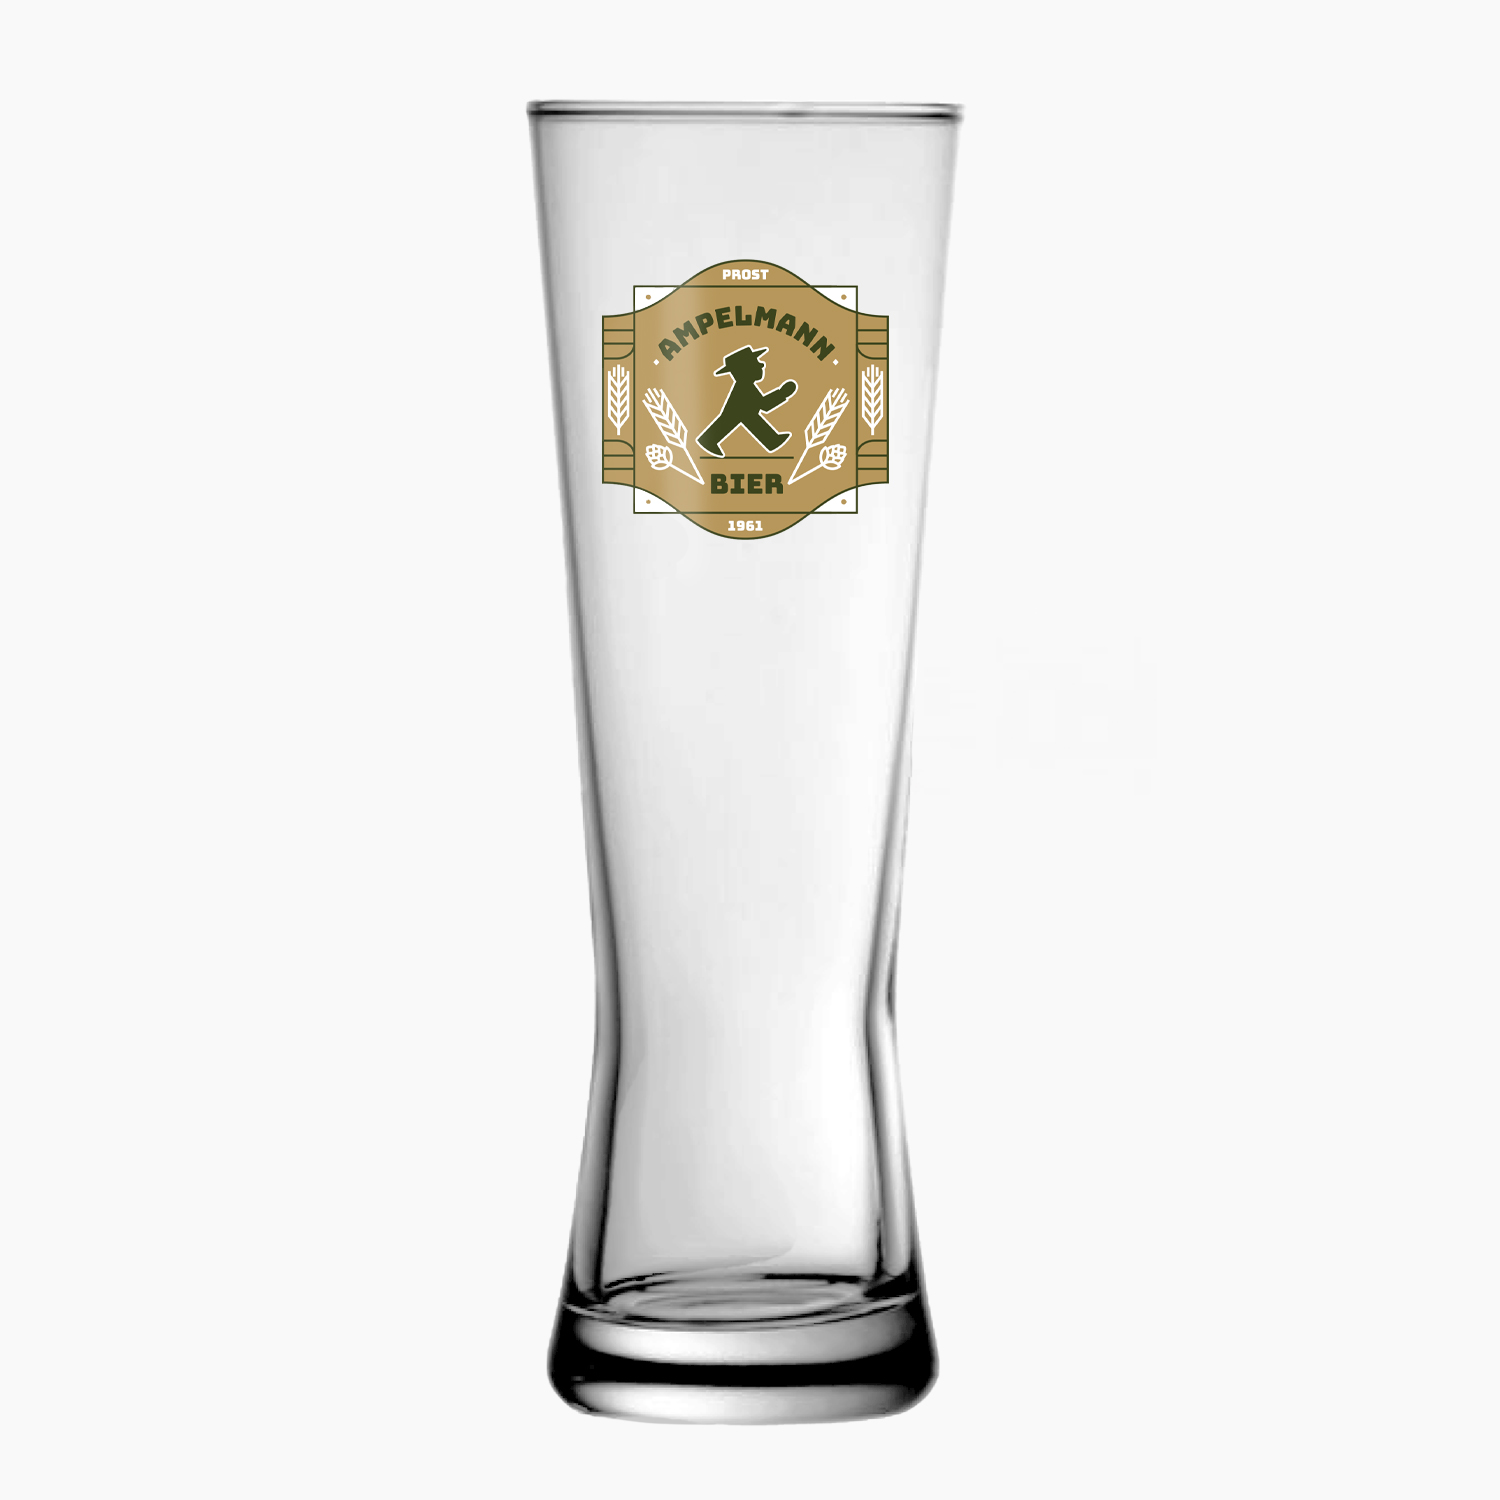 BIERKENNER / Beer Glass